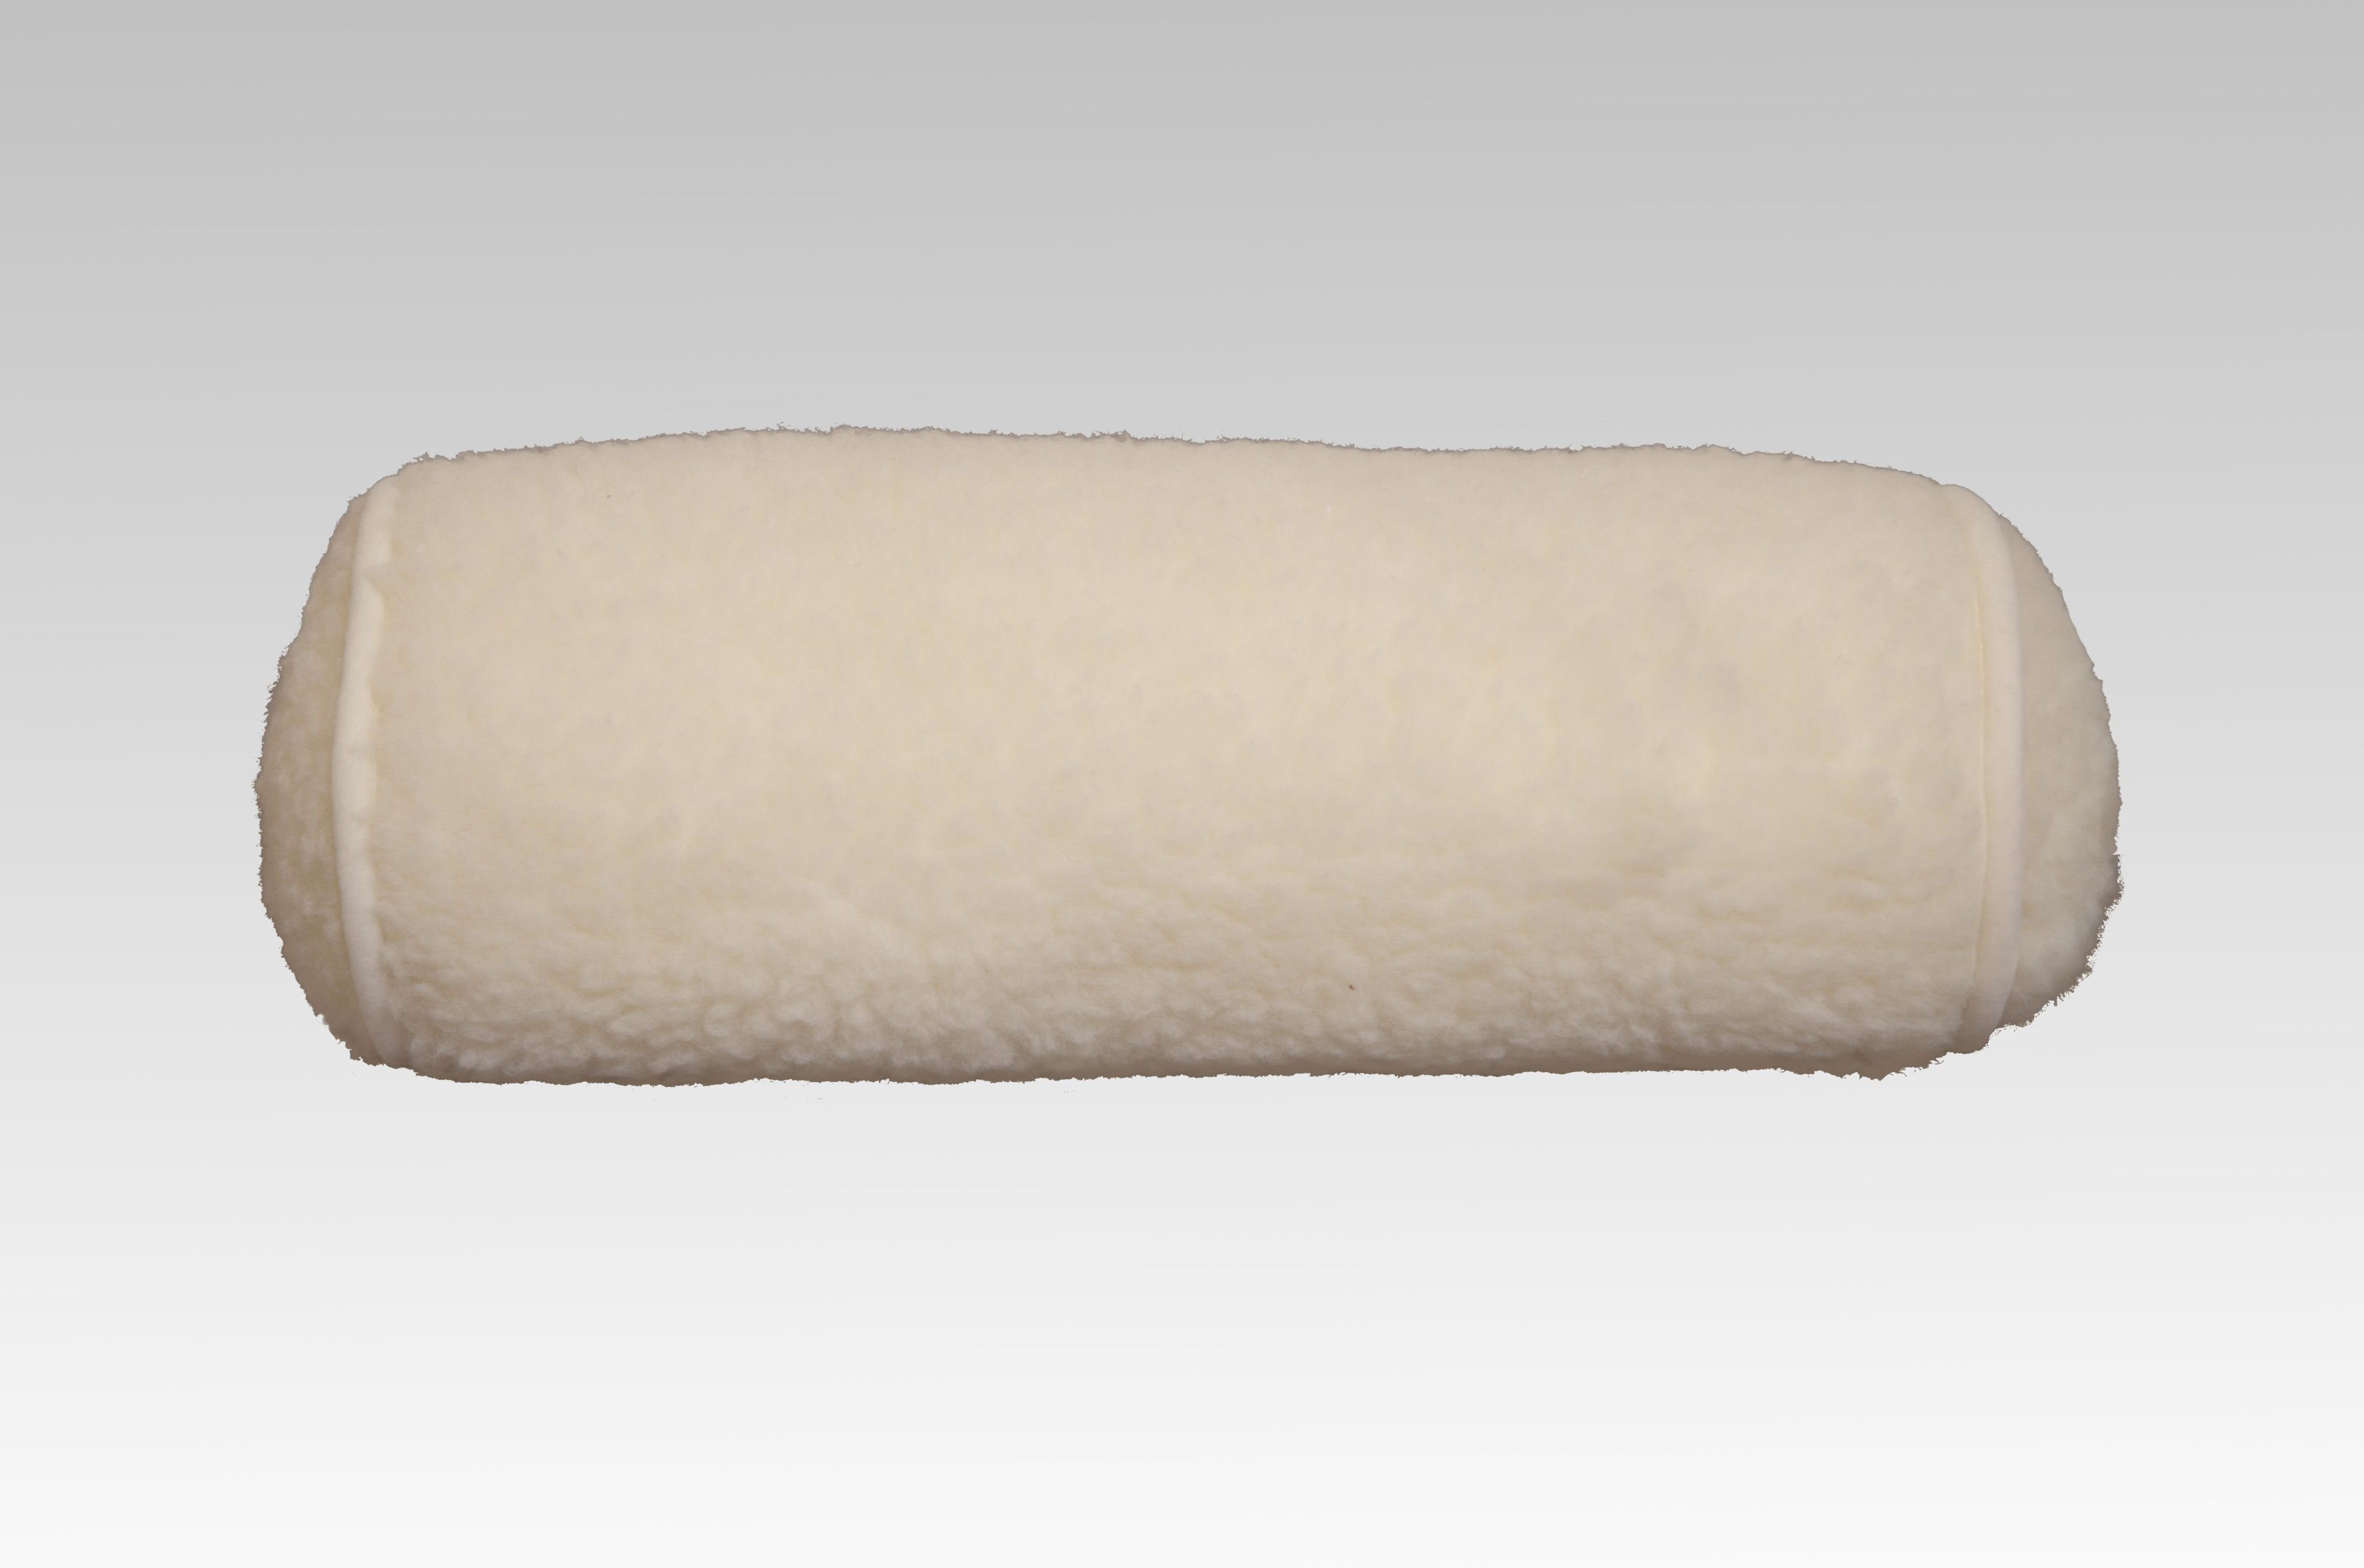 Nackenrolle ohne Bezug, 60 cm lang x Ø 20 cm, weiss, 60°C waschbar